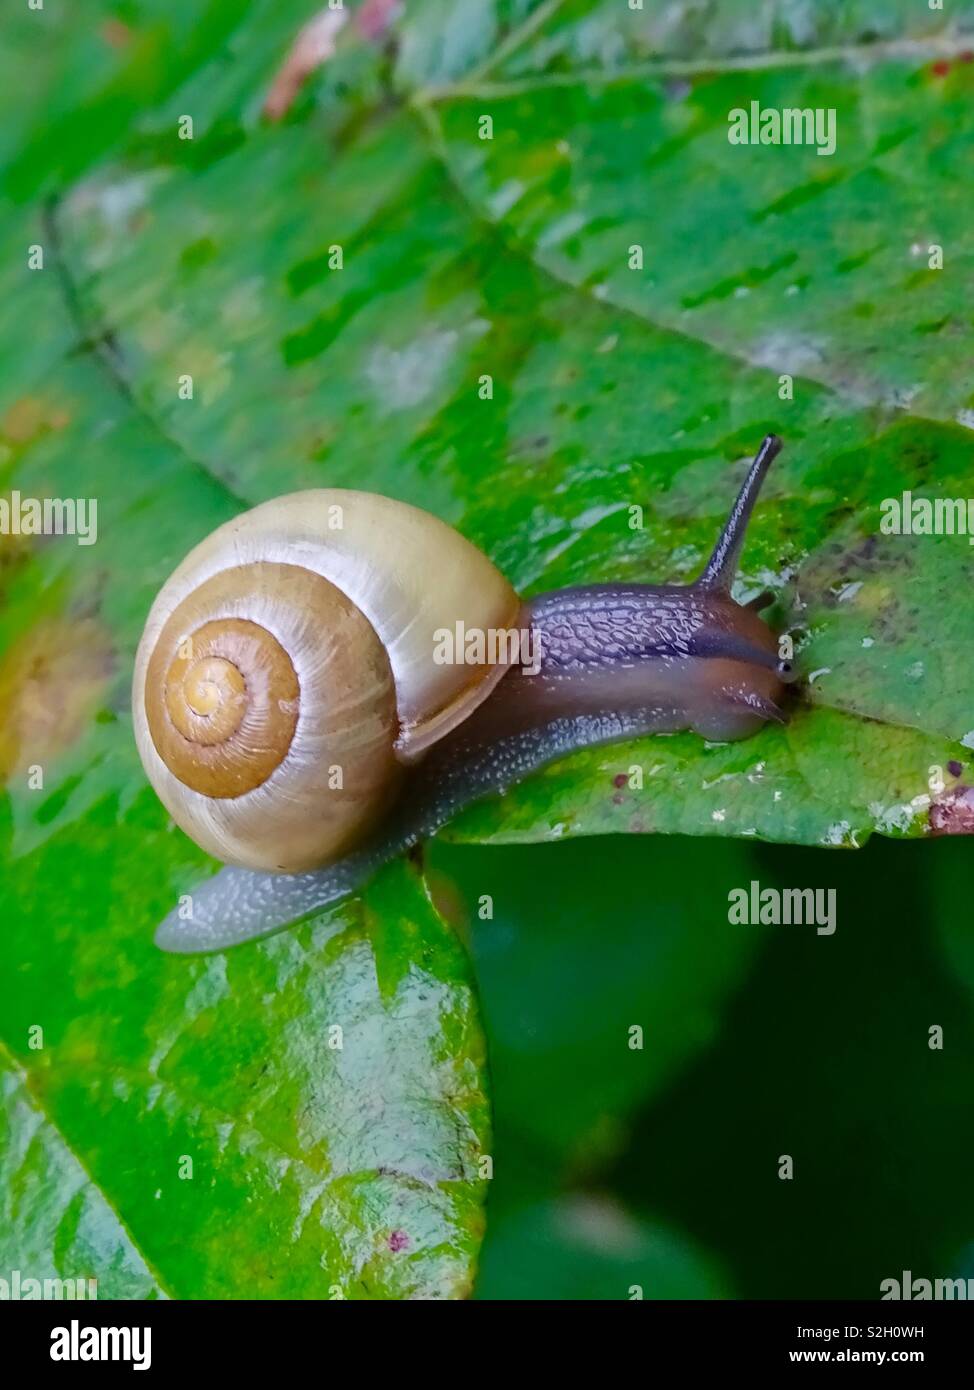 Snail on leaf in garden Stock Photo